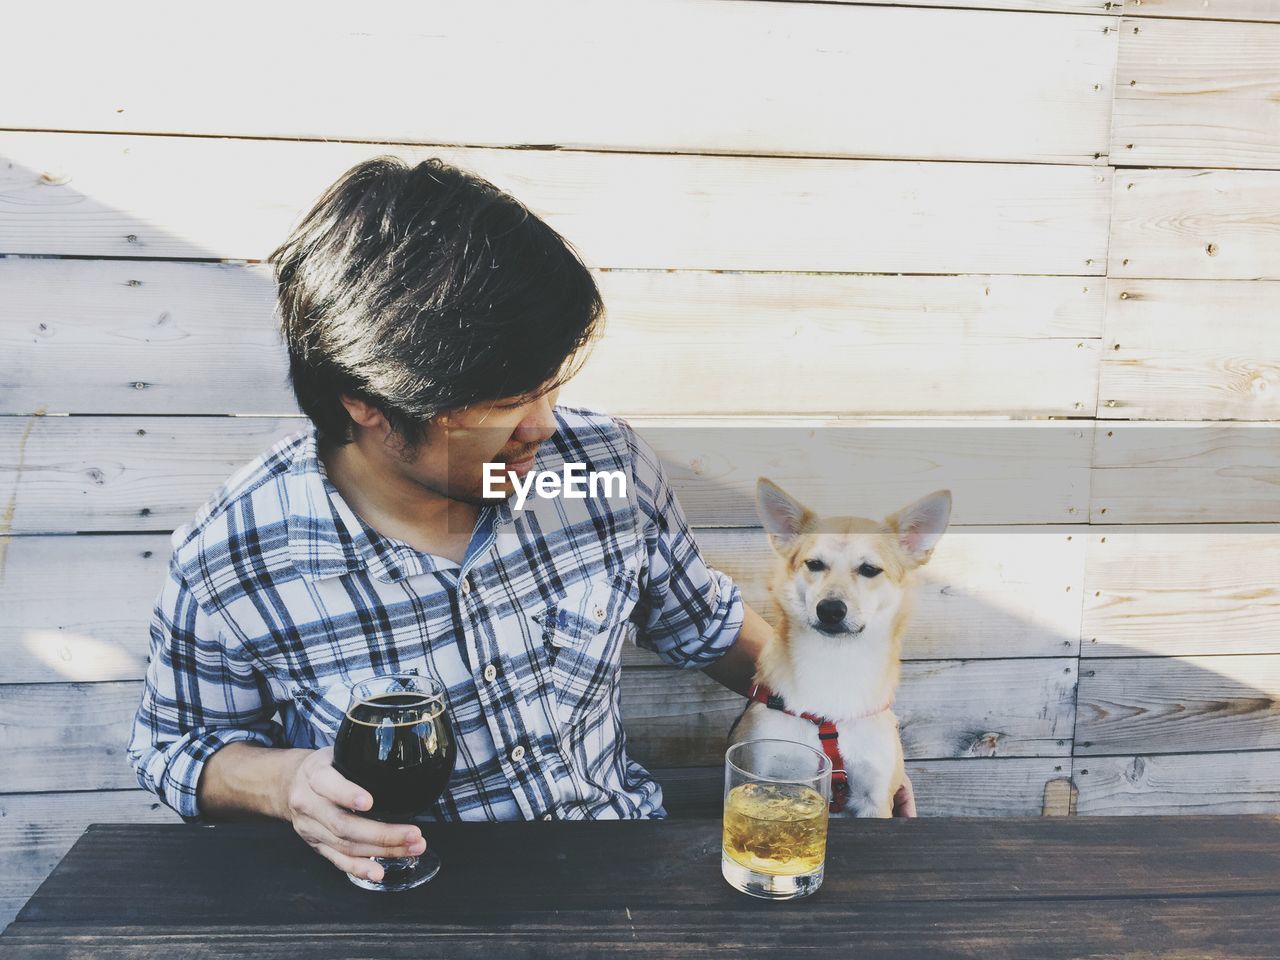 Man with dog having drinks